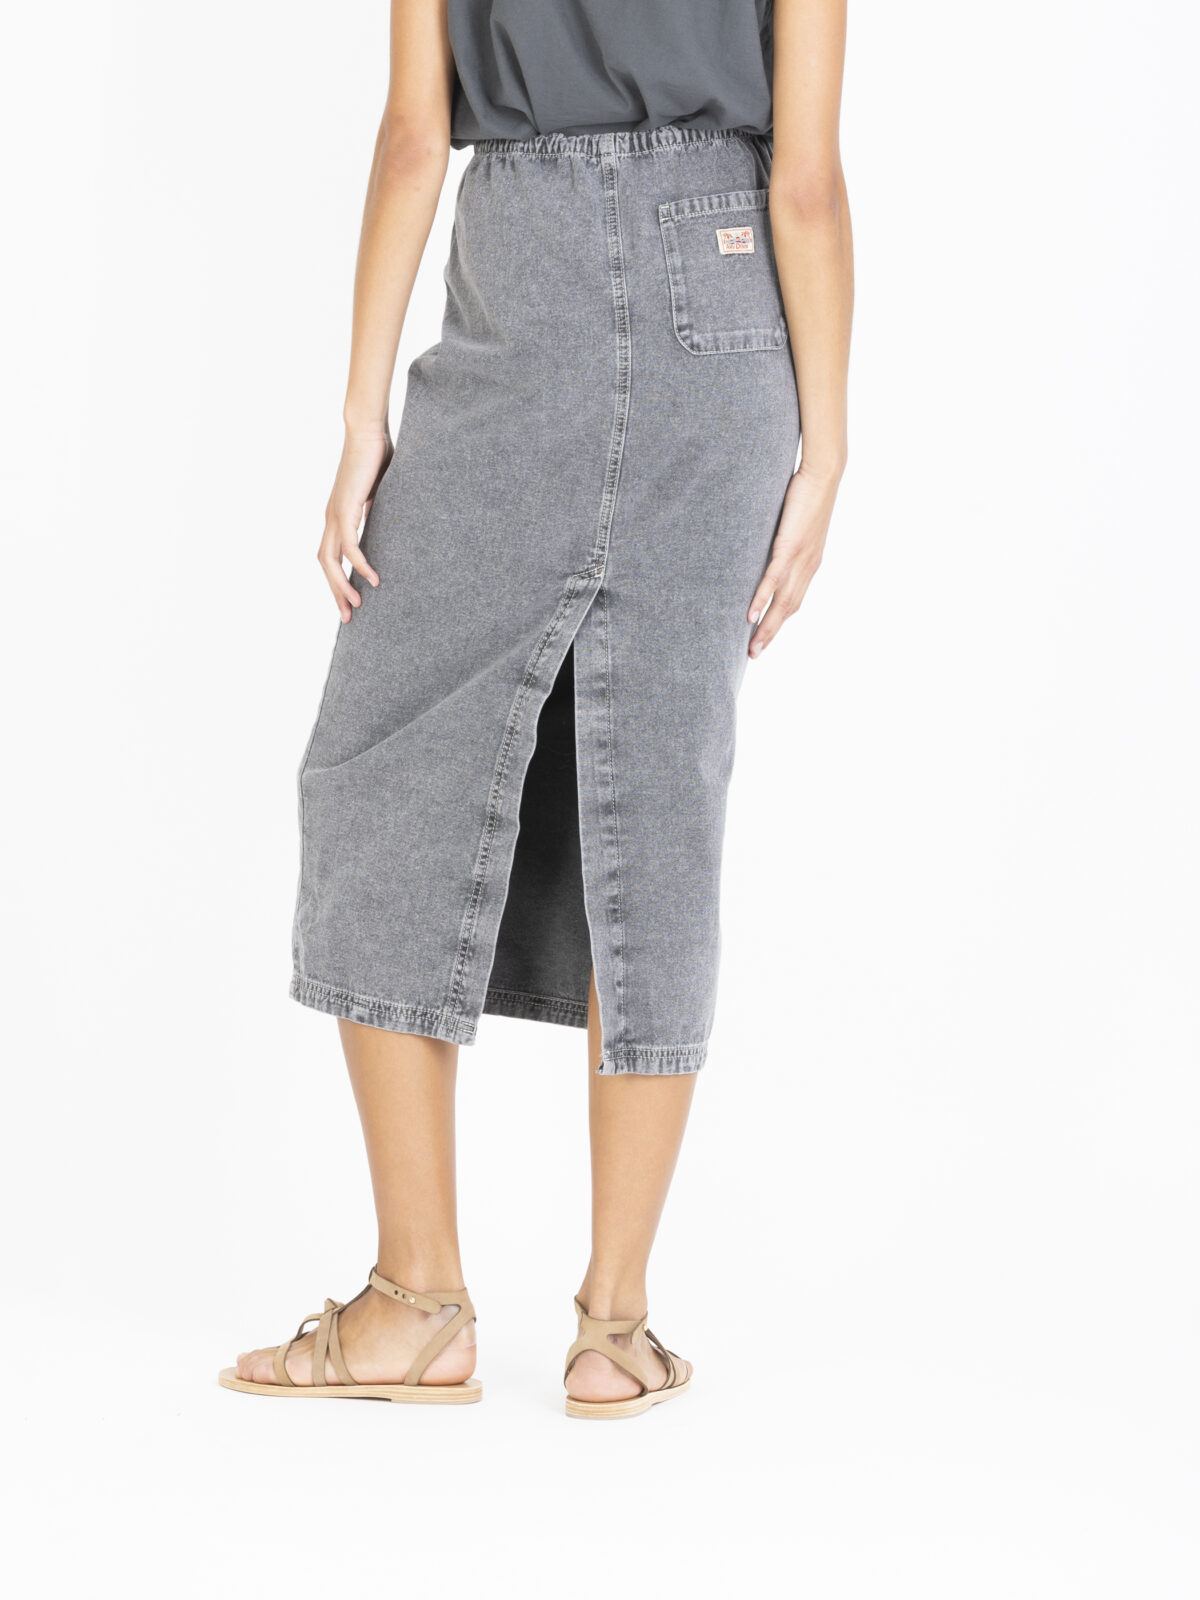 jazy-skirt-denim-tube-elastic-waist-drawstring-grey-american-vintage-matchboxathens